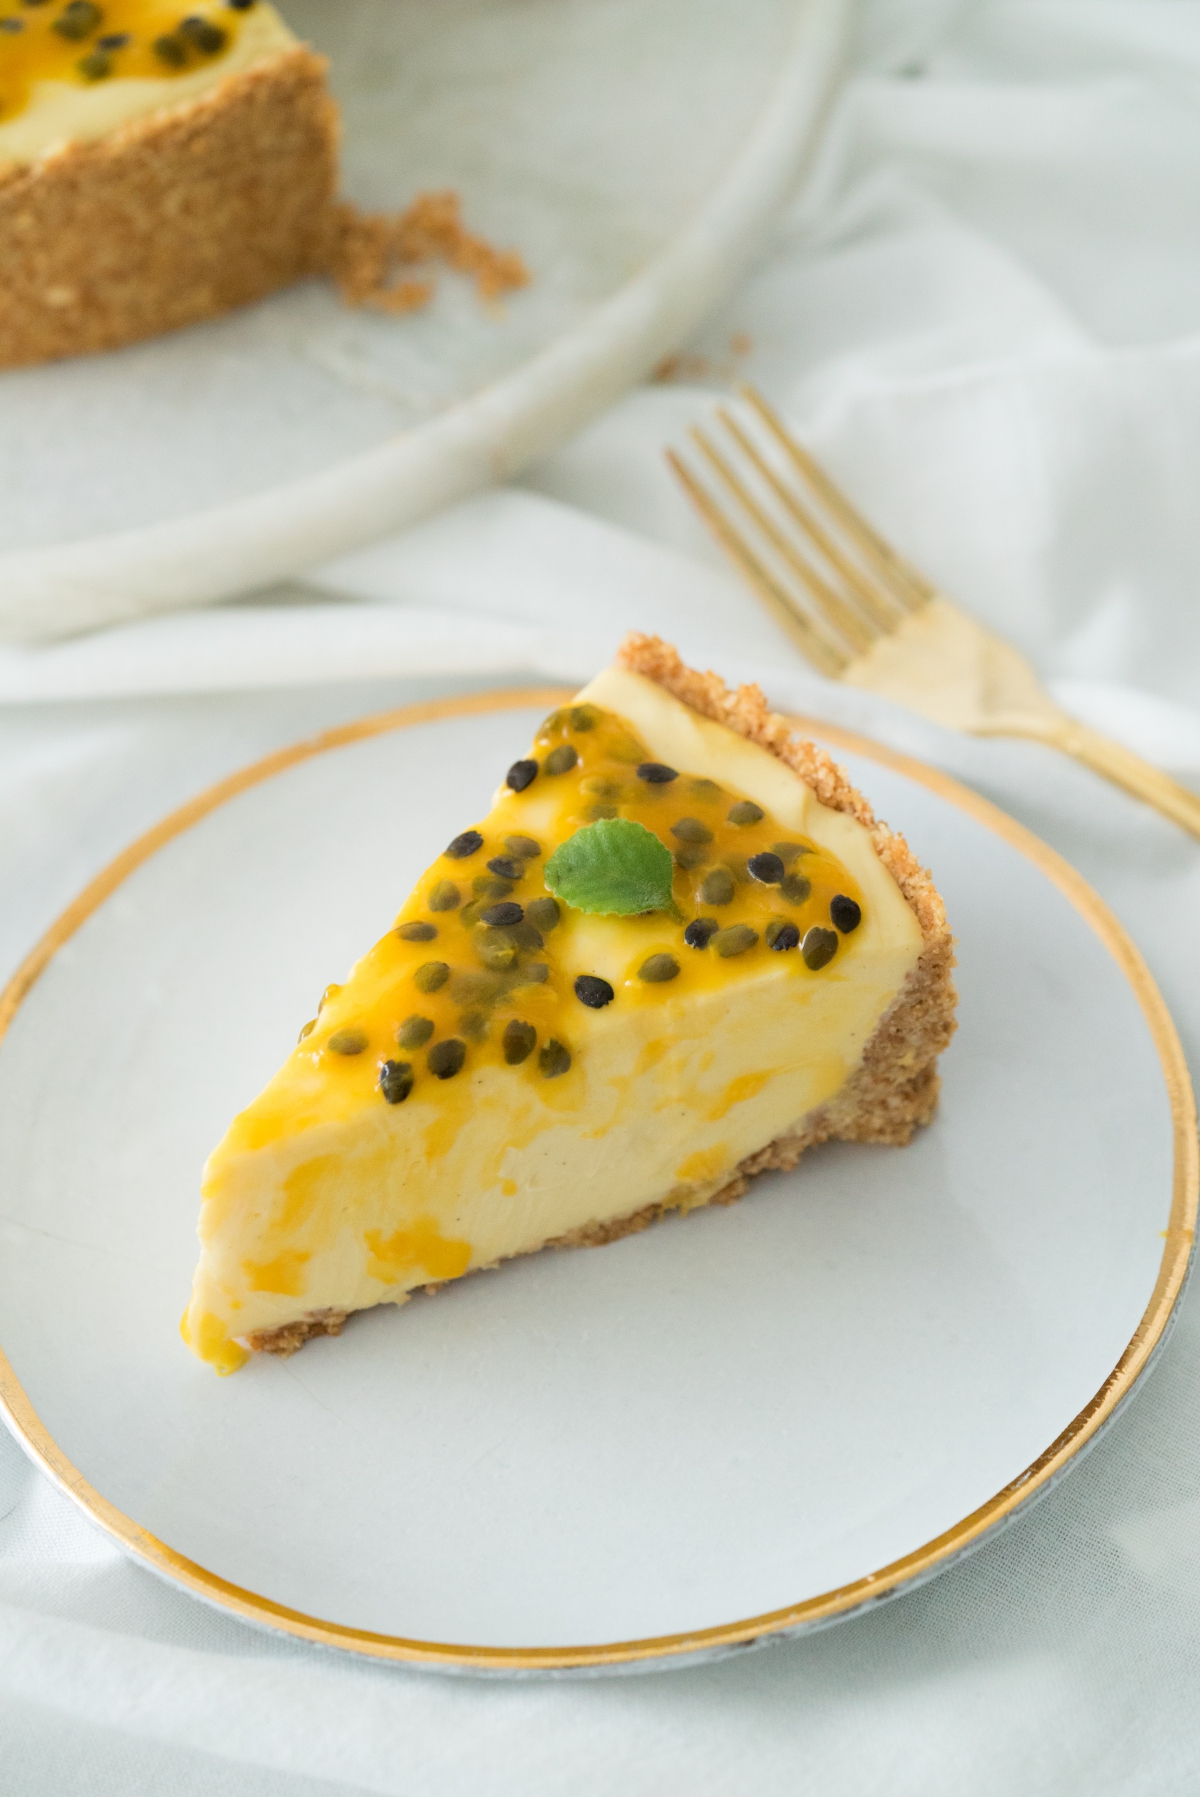 Cheesecake Fácil de Maracujá e Chocolate Branco - Danielle Noce